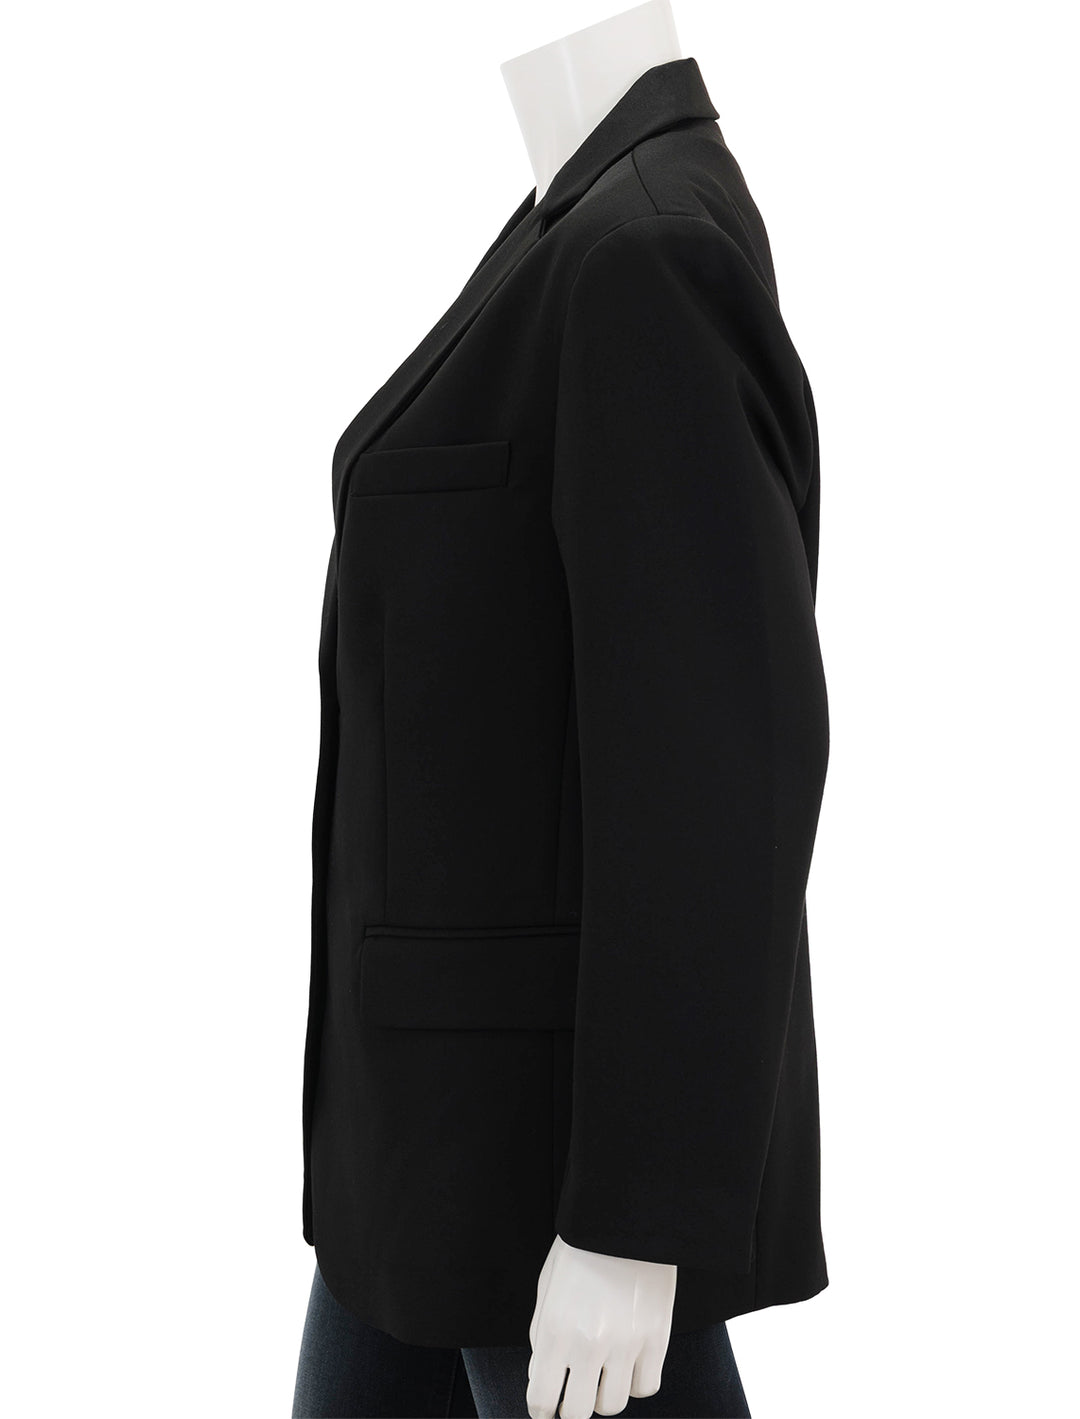 Side view of Anine Bing's quinn blazer in black.